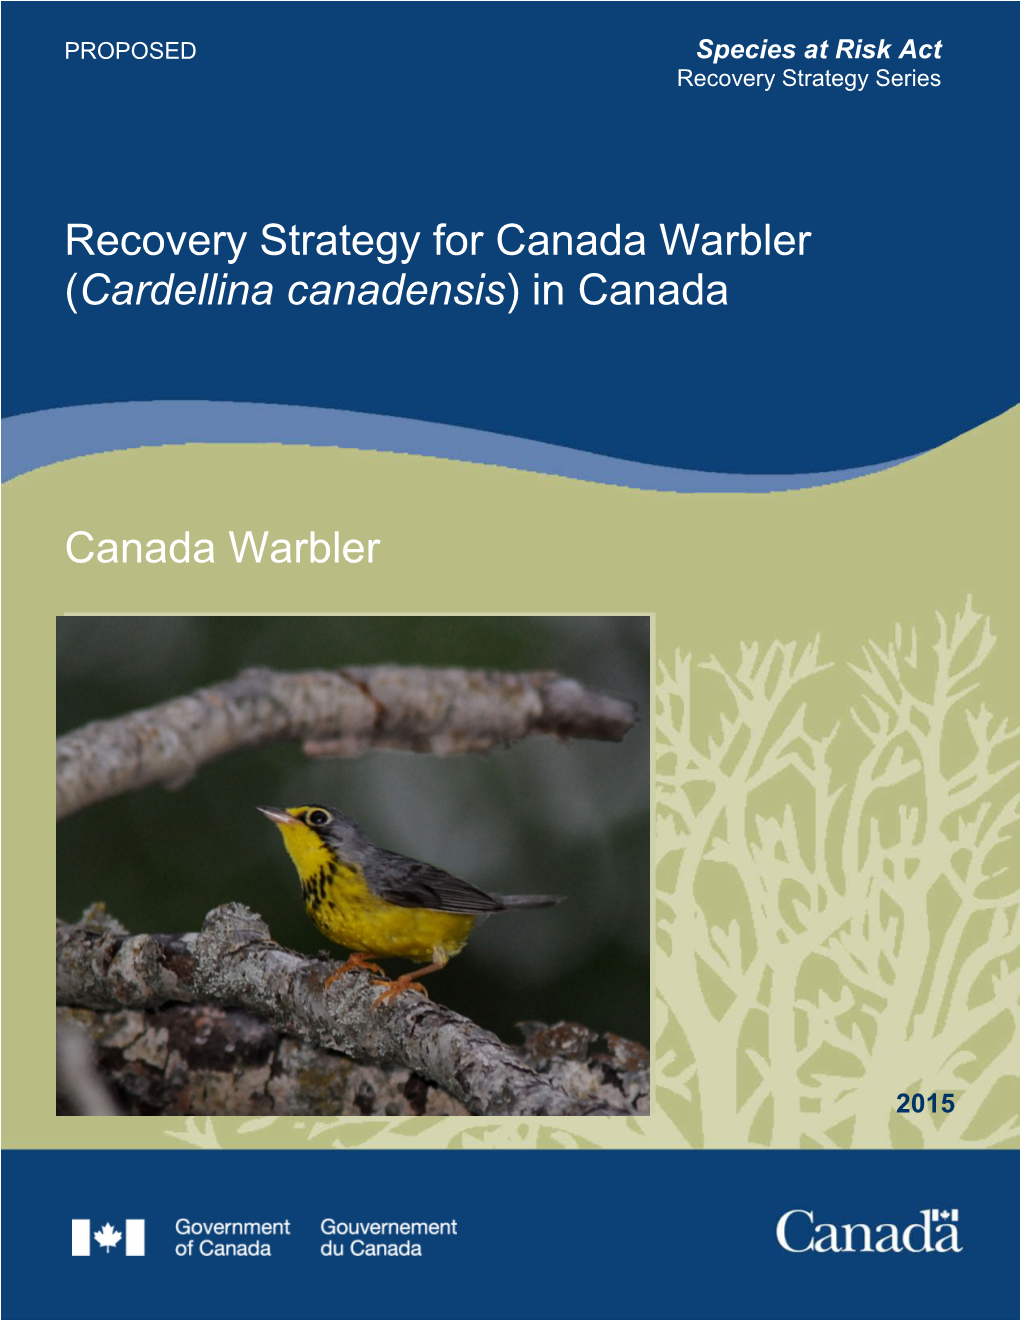 Canada Warbler (Cardellina Canadensis) in Canada